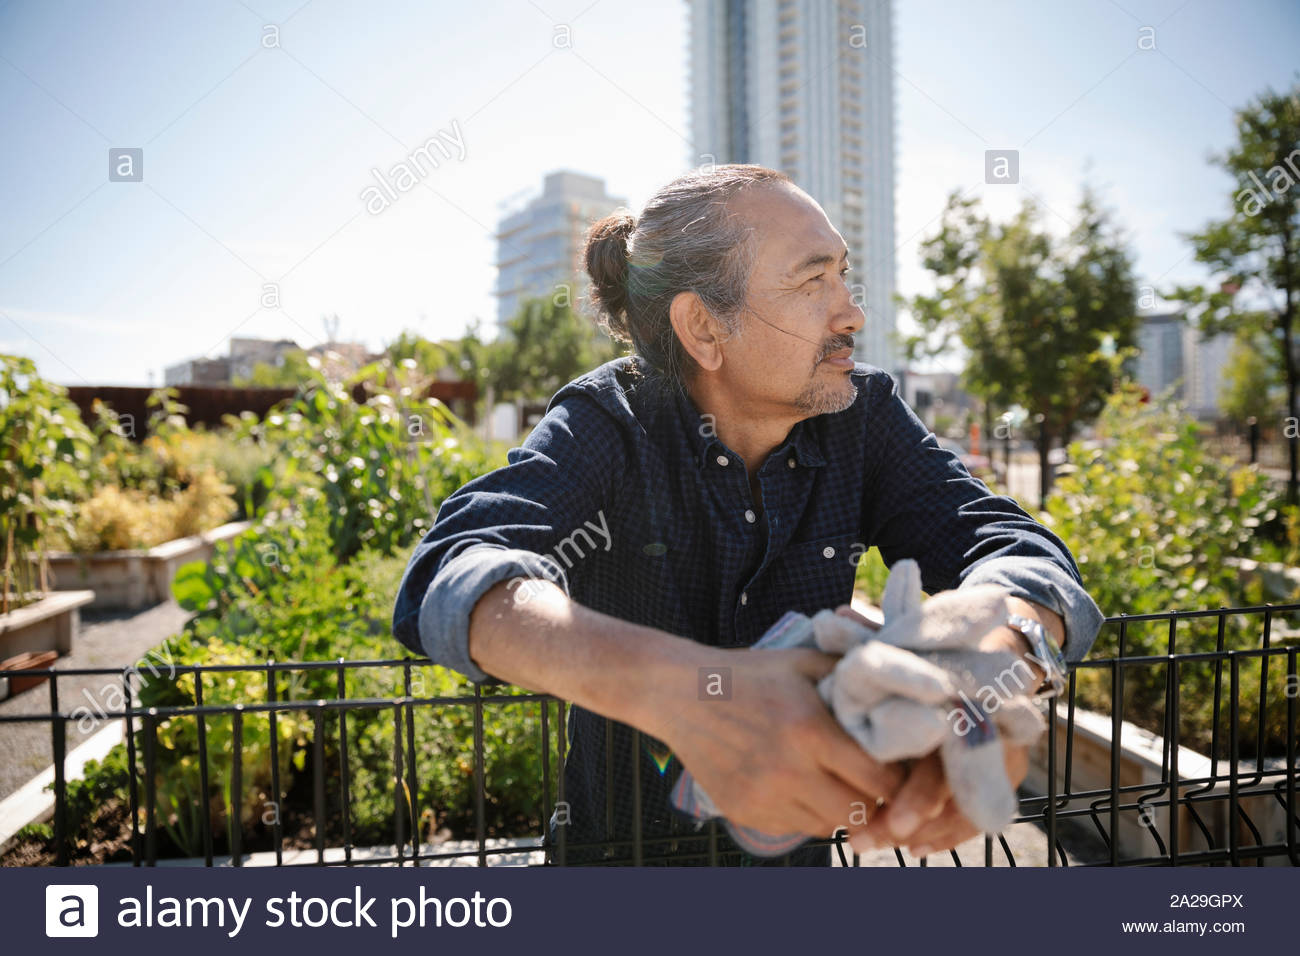 Thoughtful man with garden gloves in sunny, urban community garden Stock Photo